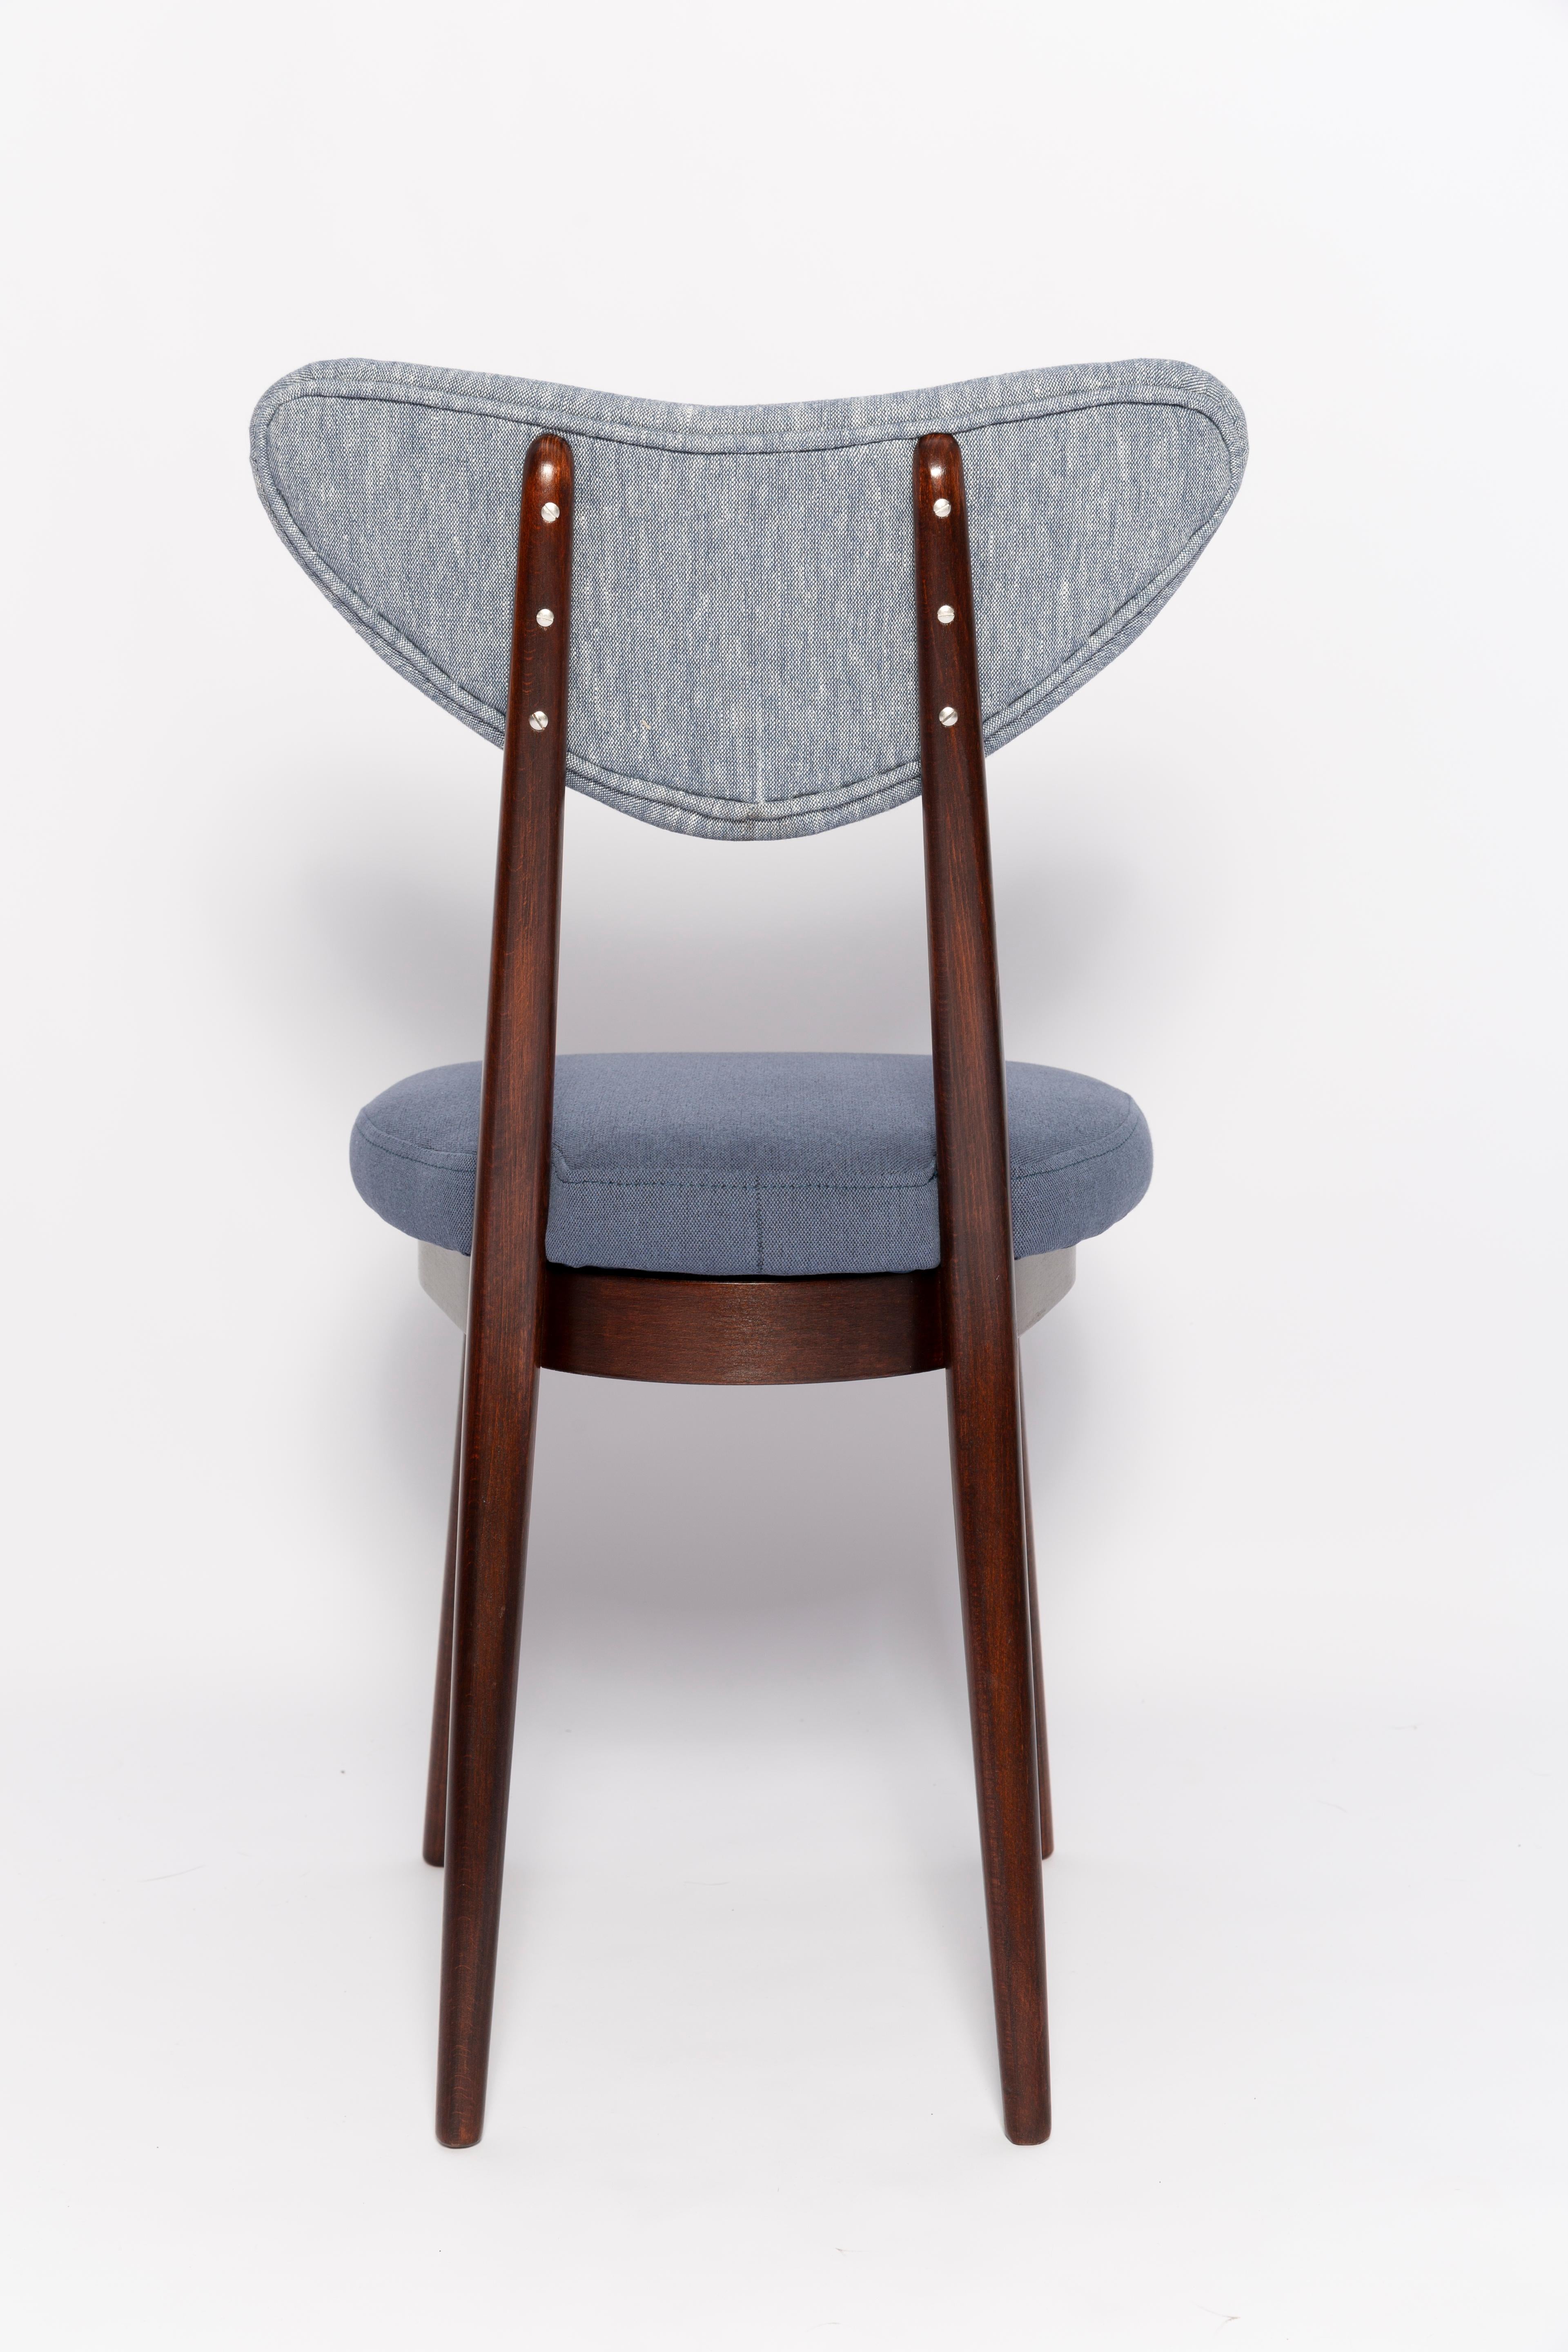 Mid Century Light and Medium Blue Denim Heart Chair, Europe, 1960s For Sale 3